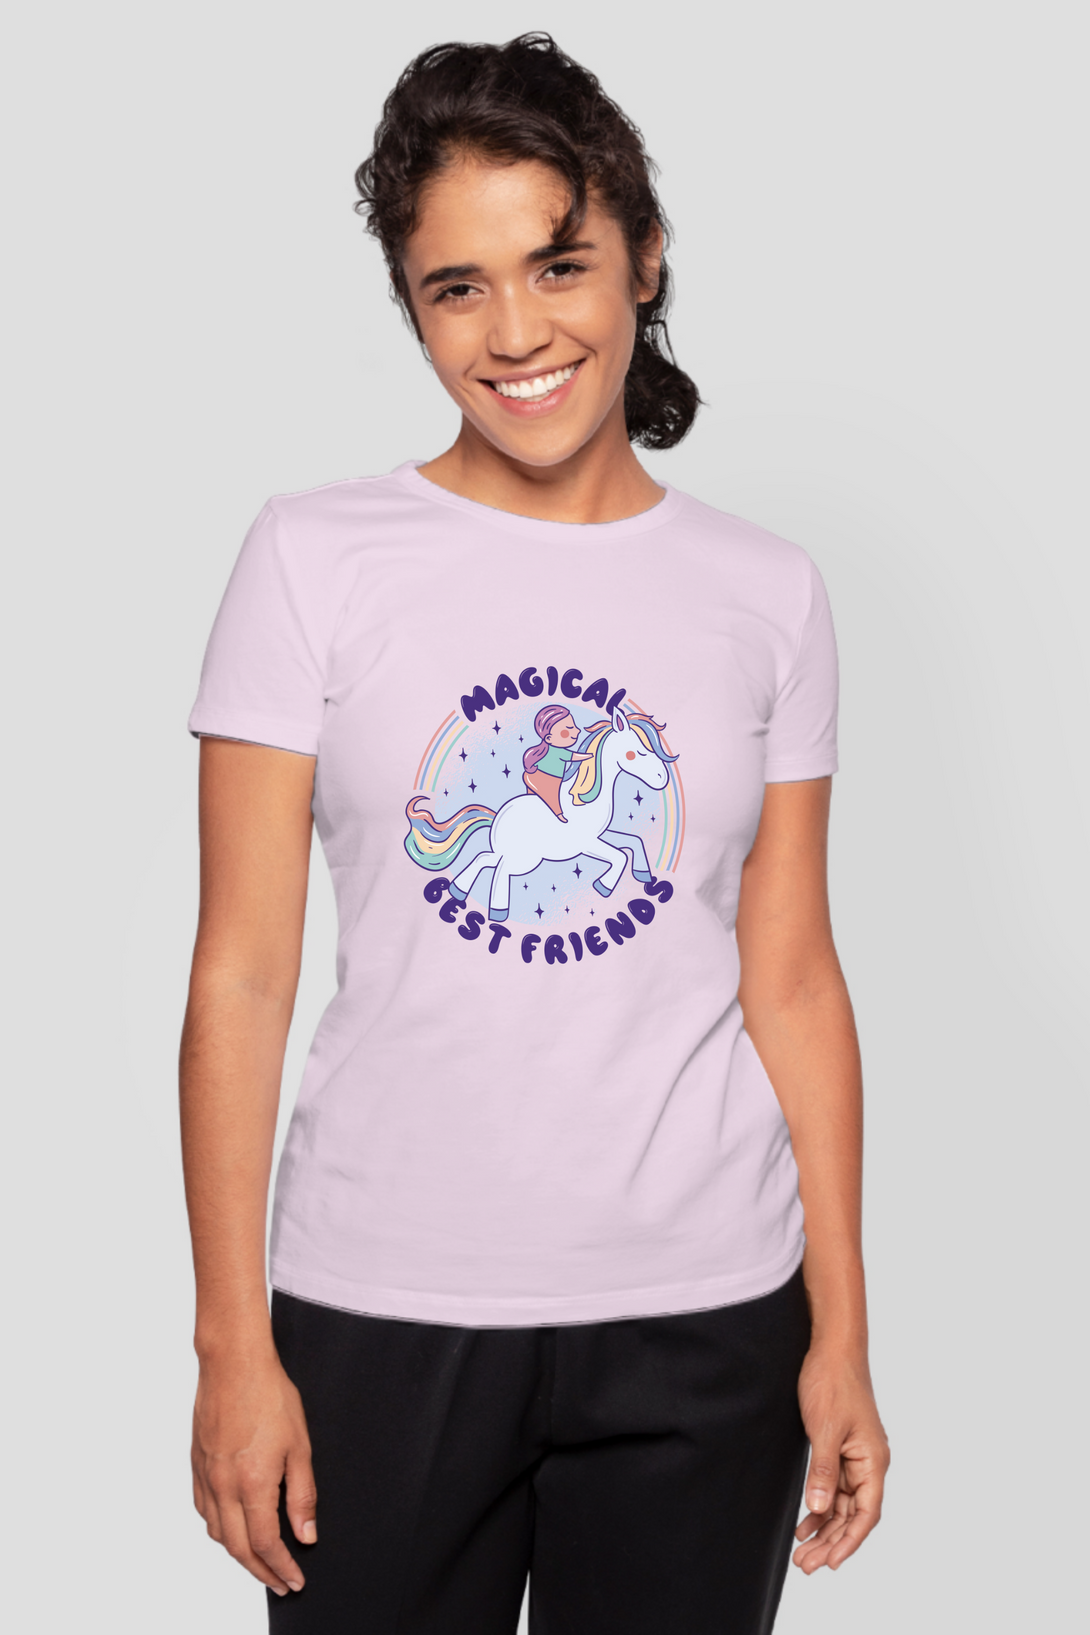 Magical Friend Printed T-Shirt For Women - WowWaves - 8